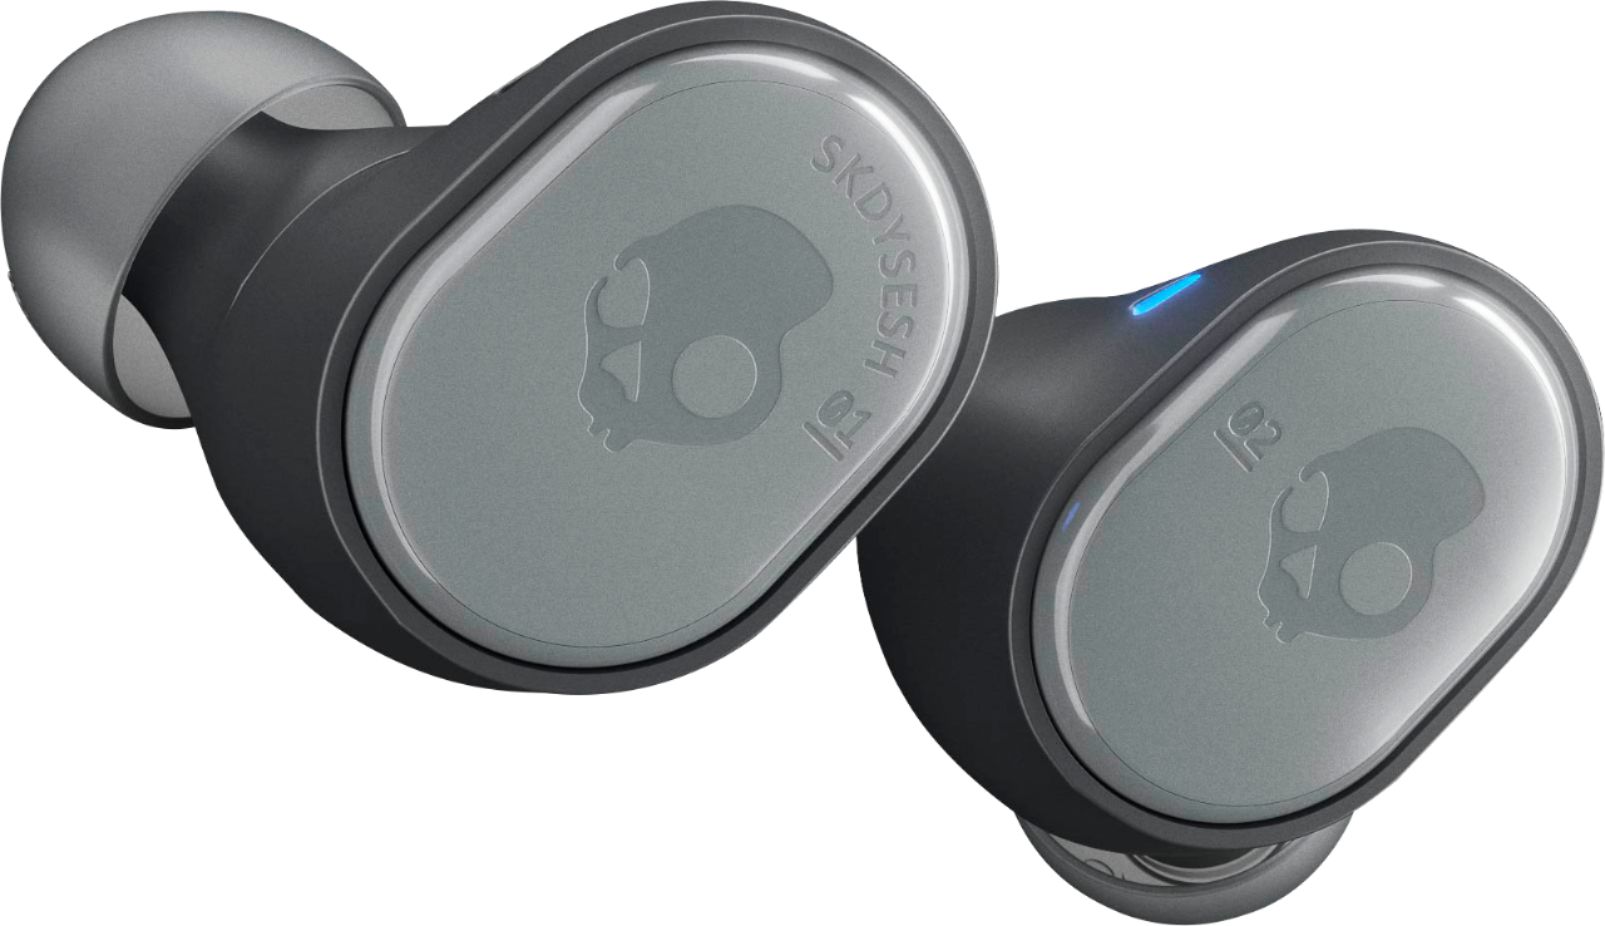 Wireless Headphones: Wireless Earbuds - Best Buy